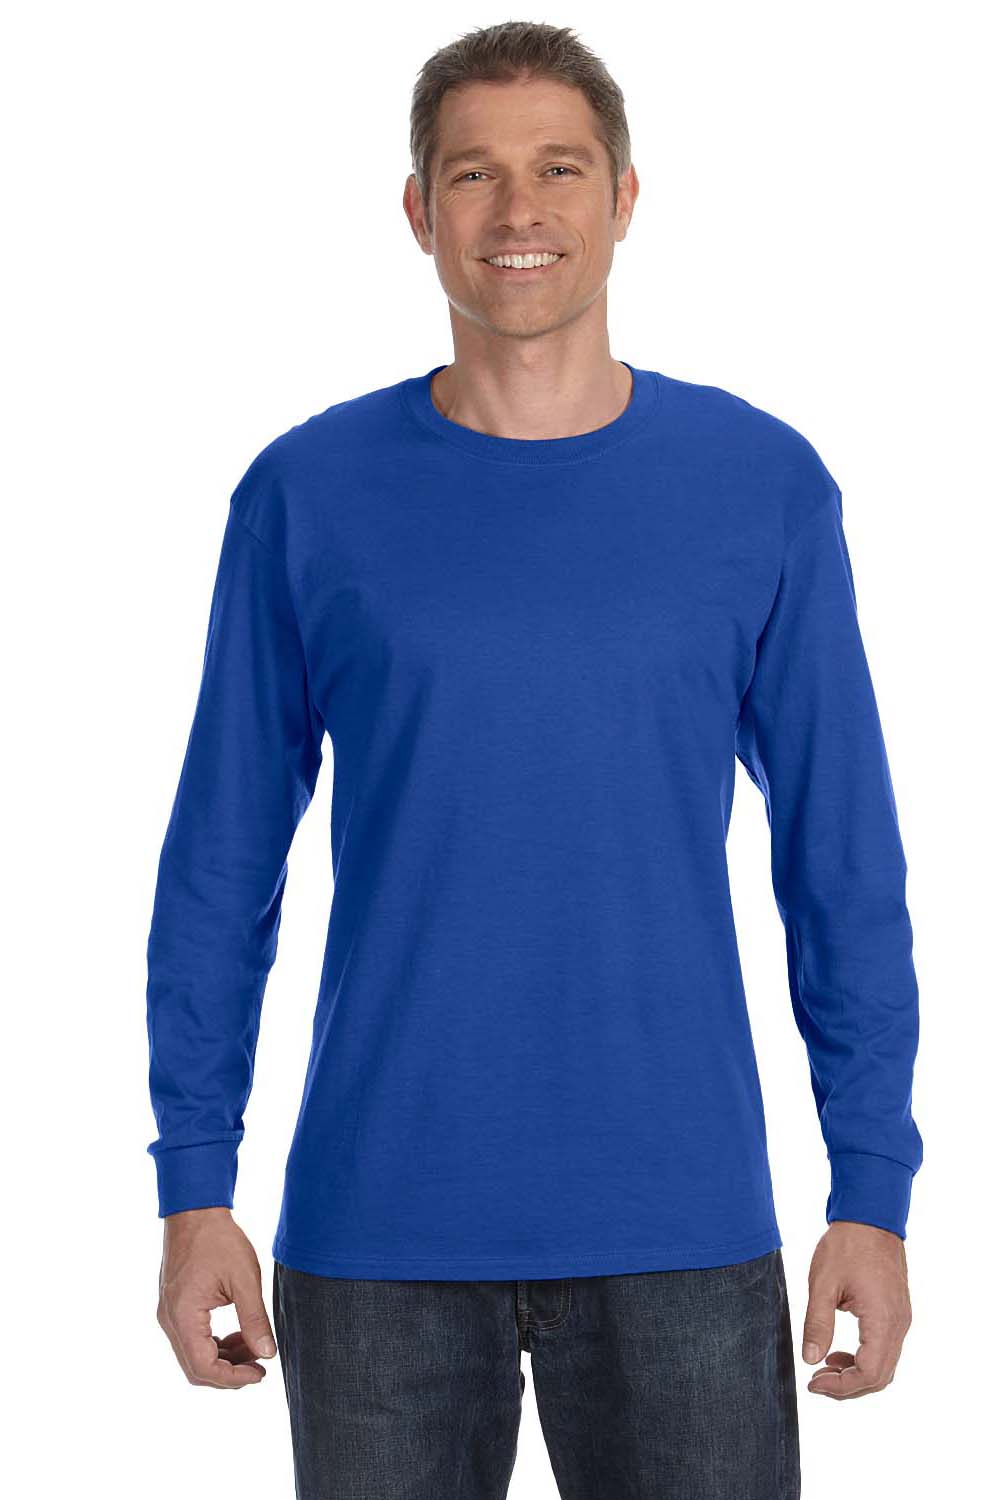 Hanes Men's Comfortsoft Long-Sleeve T-Shirt